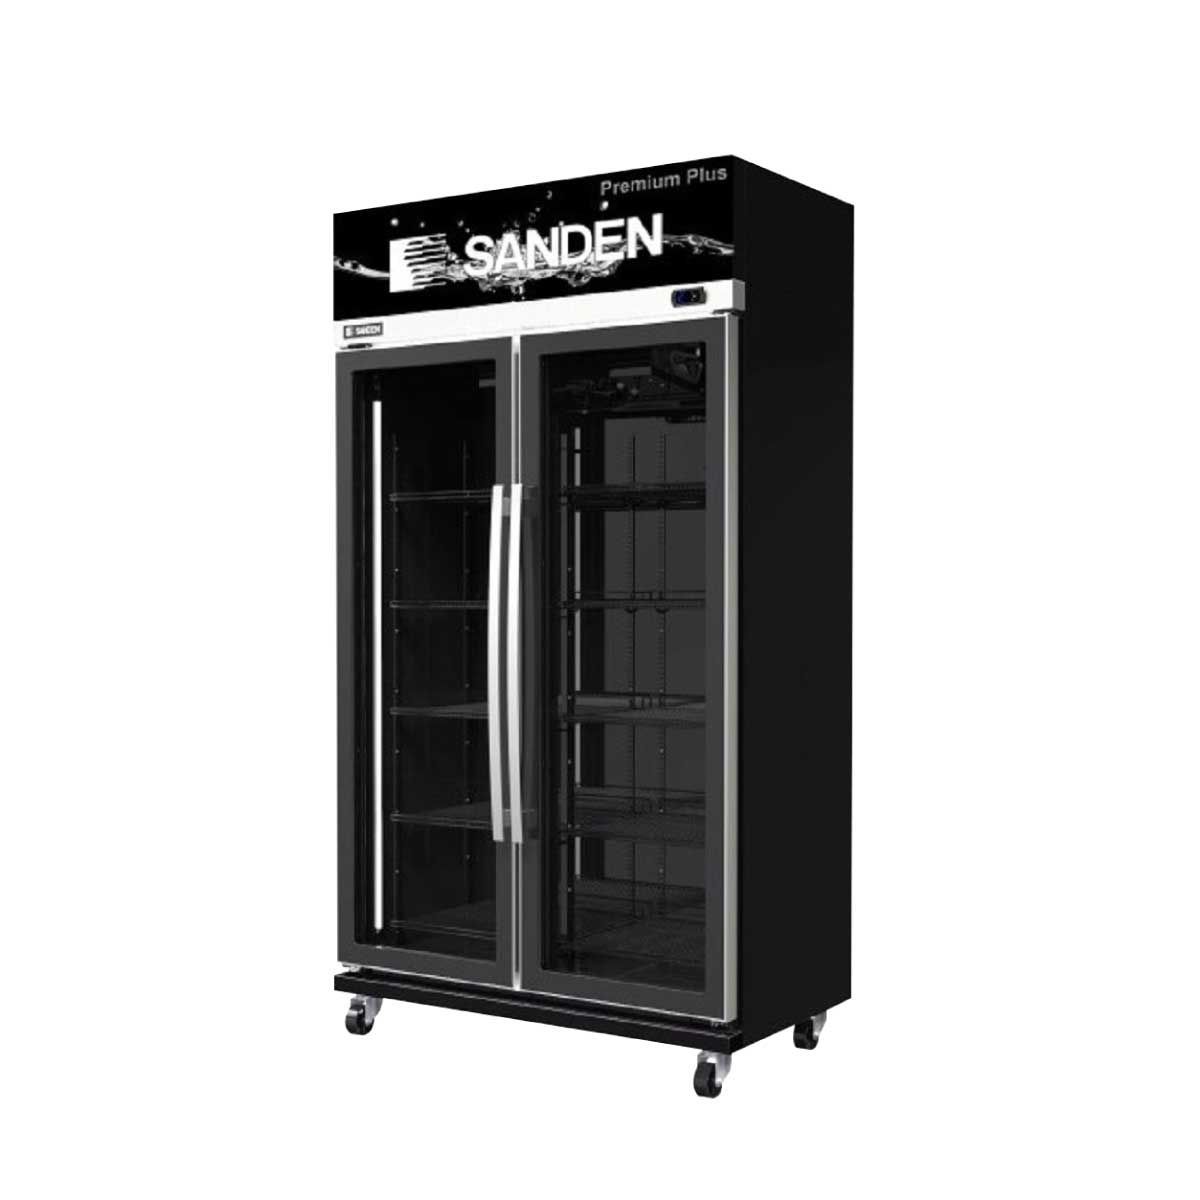 SANDEN ตู้แช่เครื่องดื่ม 2 ประตู Inverter Premium Plus Cooler  รุ่น YEM-1105IP